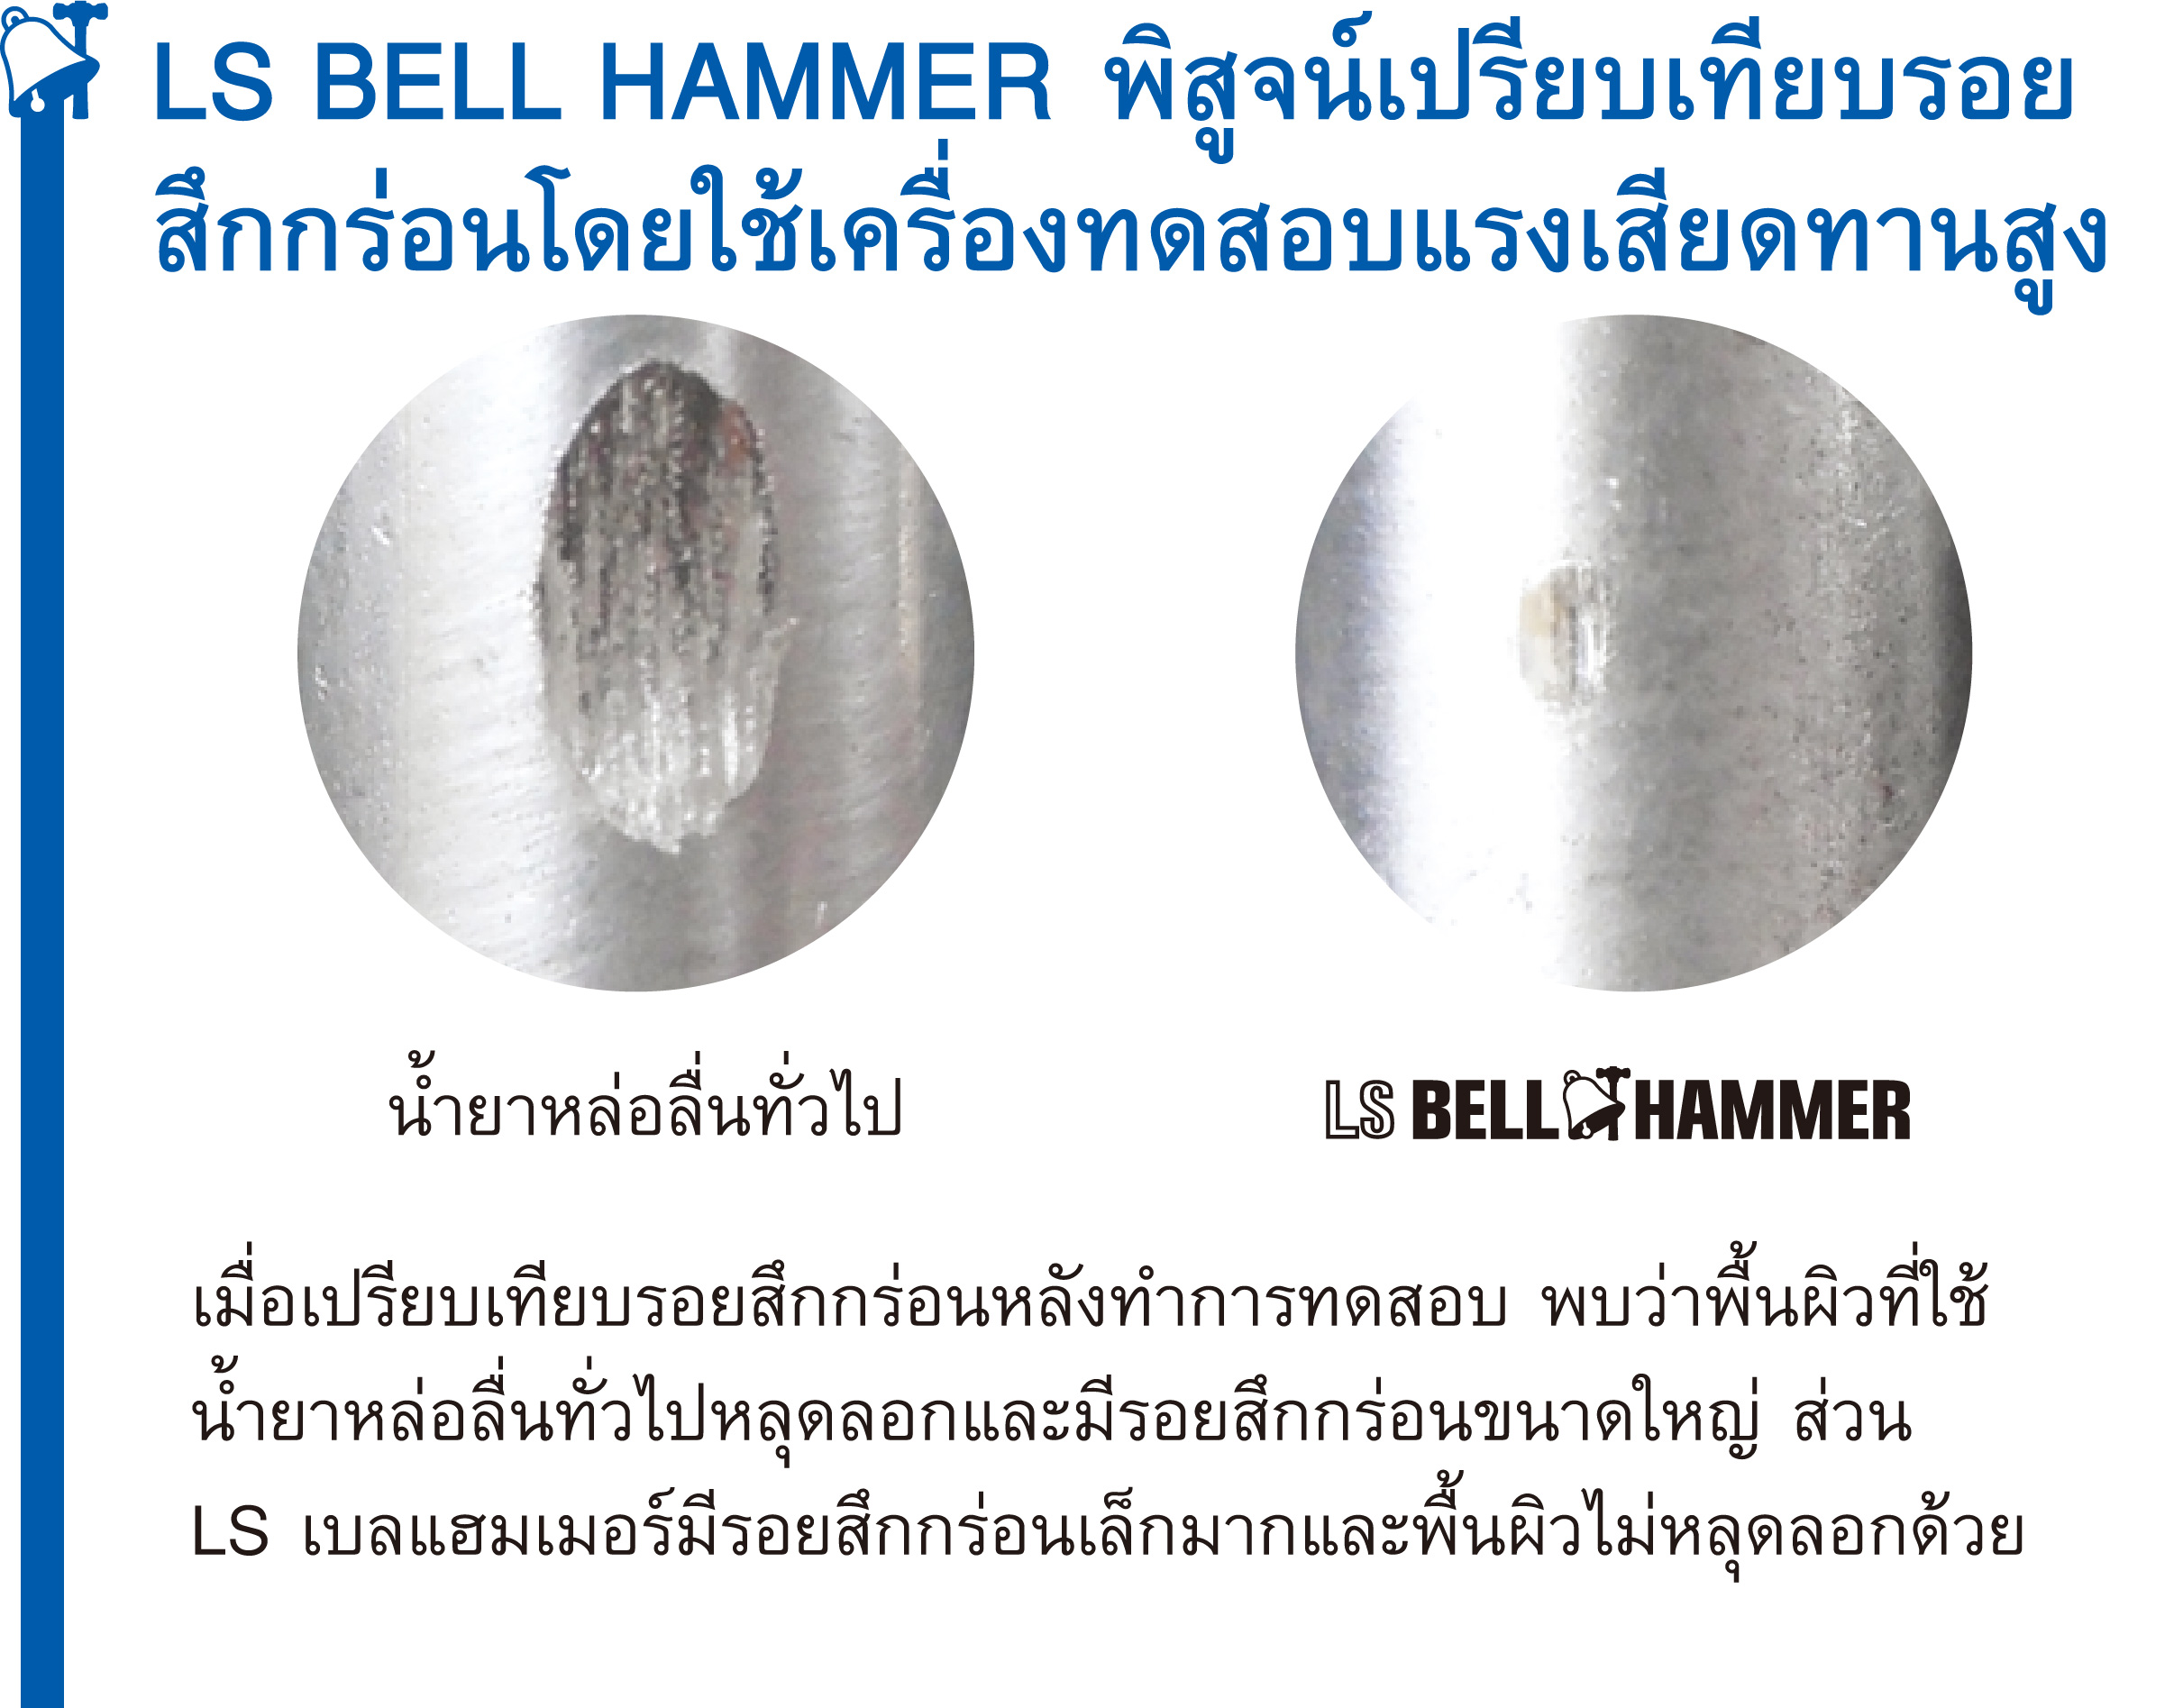 LS BELL HAMMER พิสูจน์เปรียบเทียบรอย สึกกร่อนโดยใช้เครื่องทดสอบแรงเสียดทานสูง